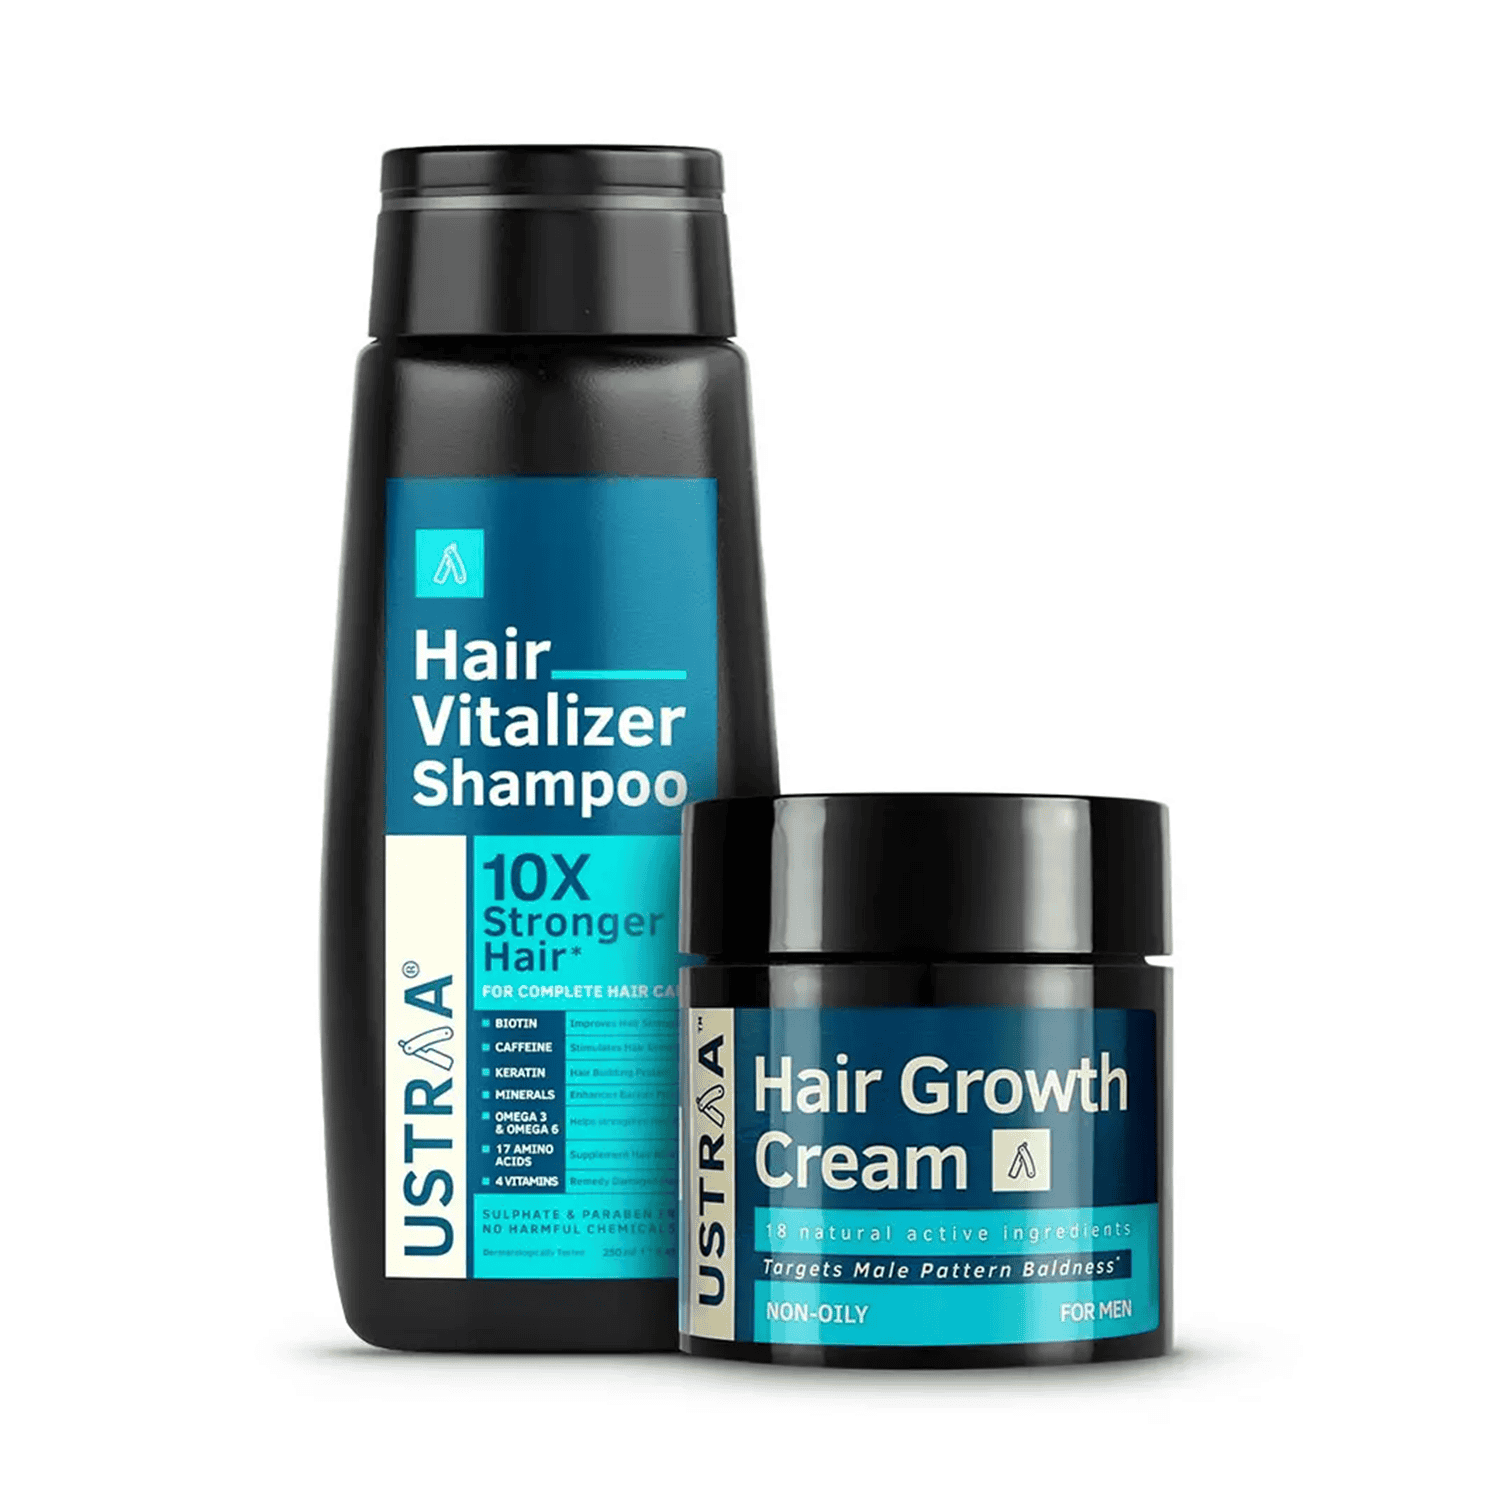 Ustraa | Ustraa Hair Vitalizer Shampoo & Hair Growth Cream Combo